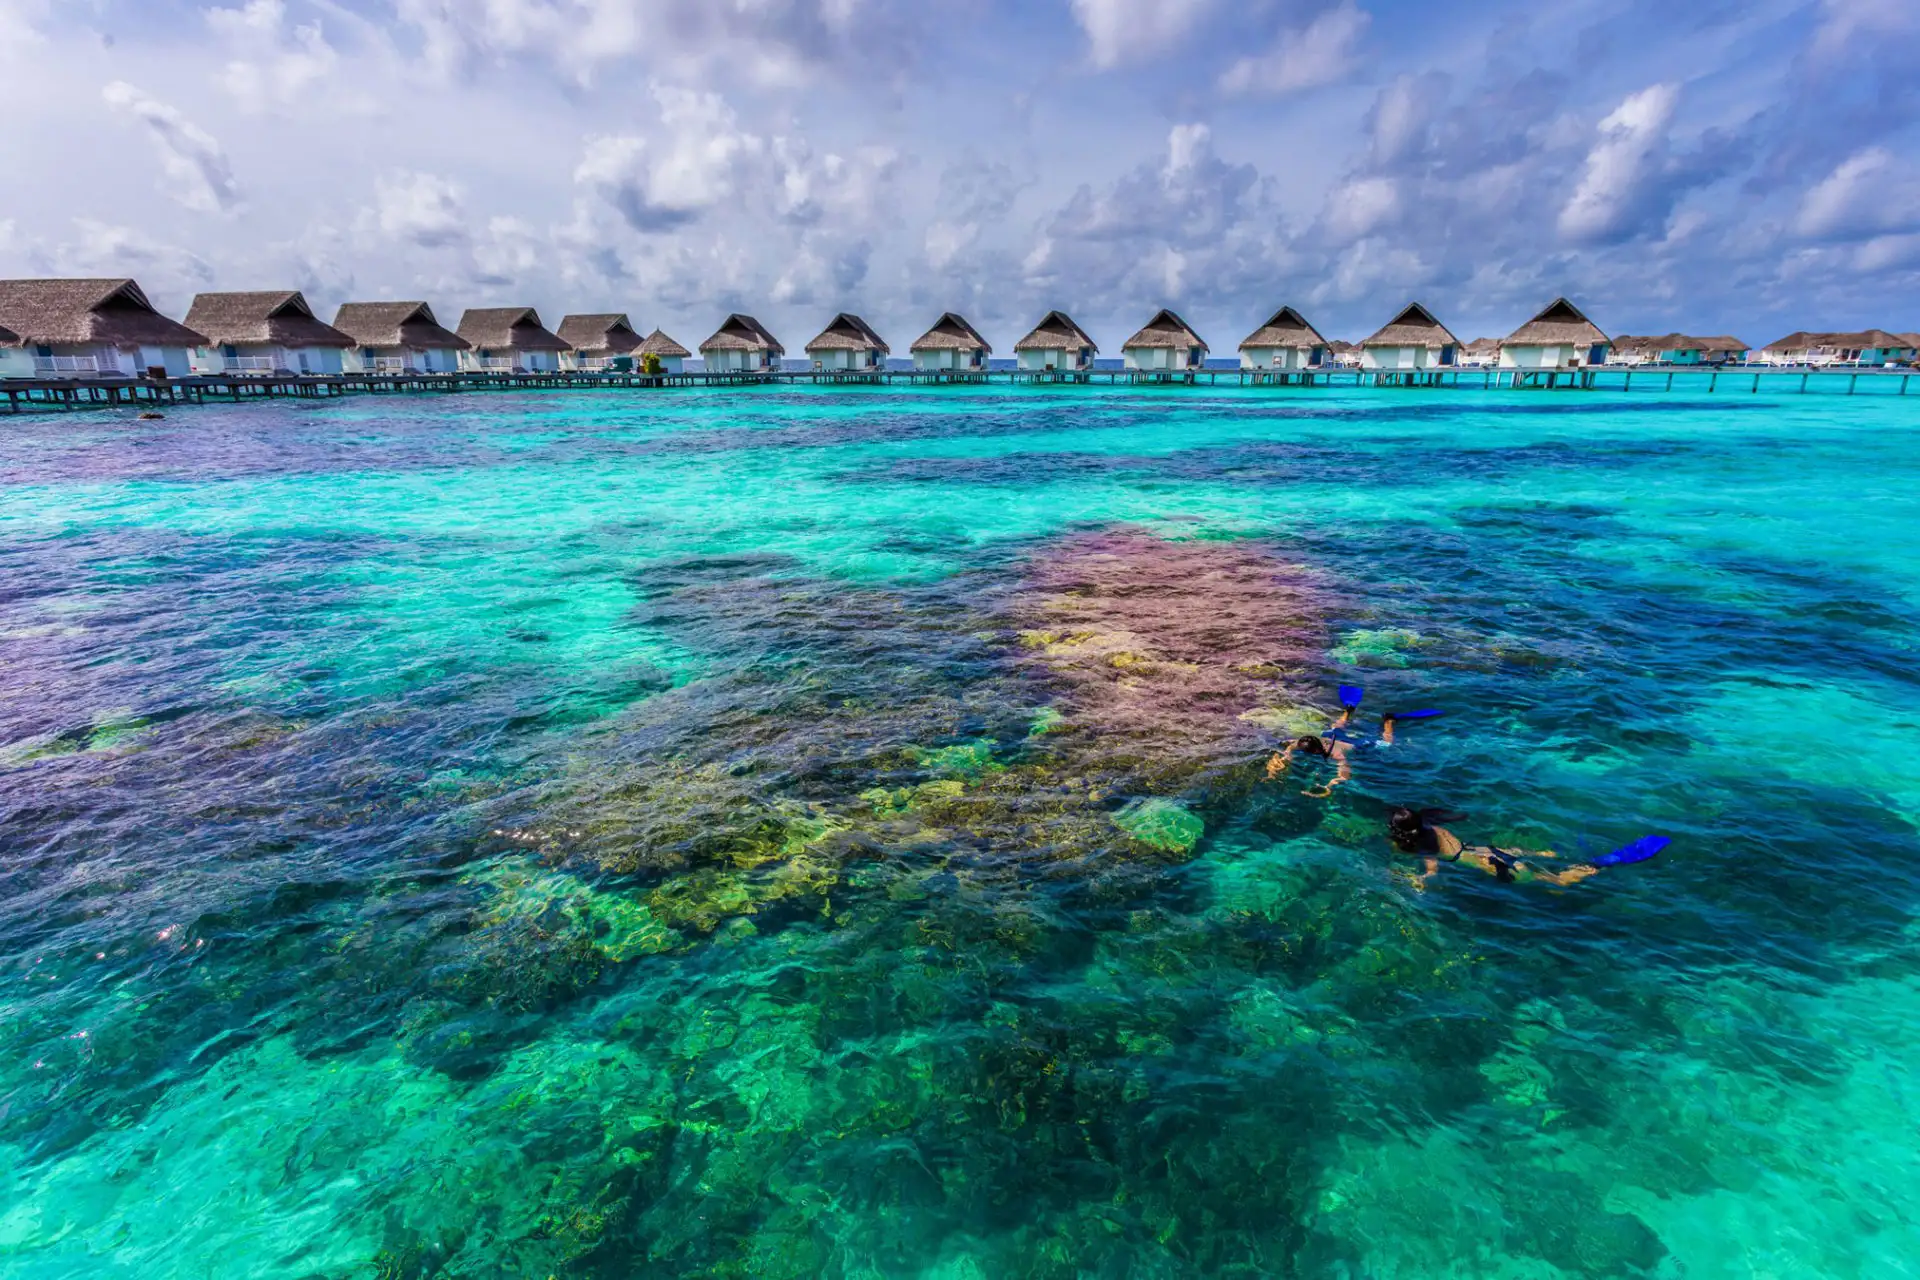 Centara Grand Island Resort & Spa in the Maldives